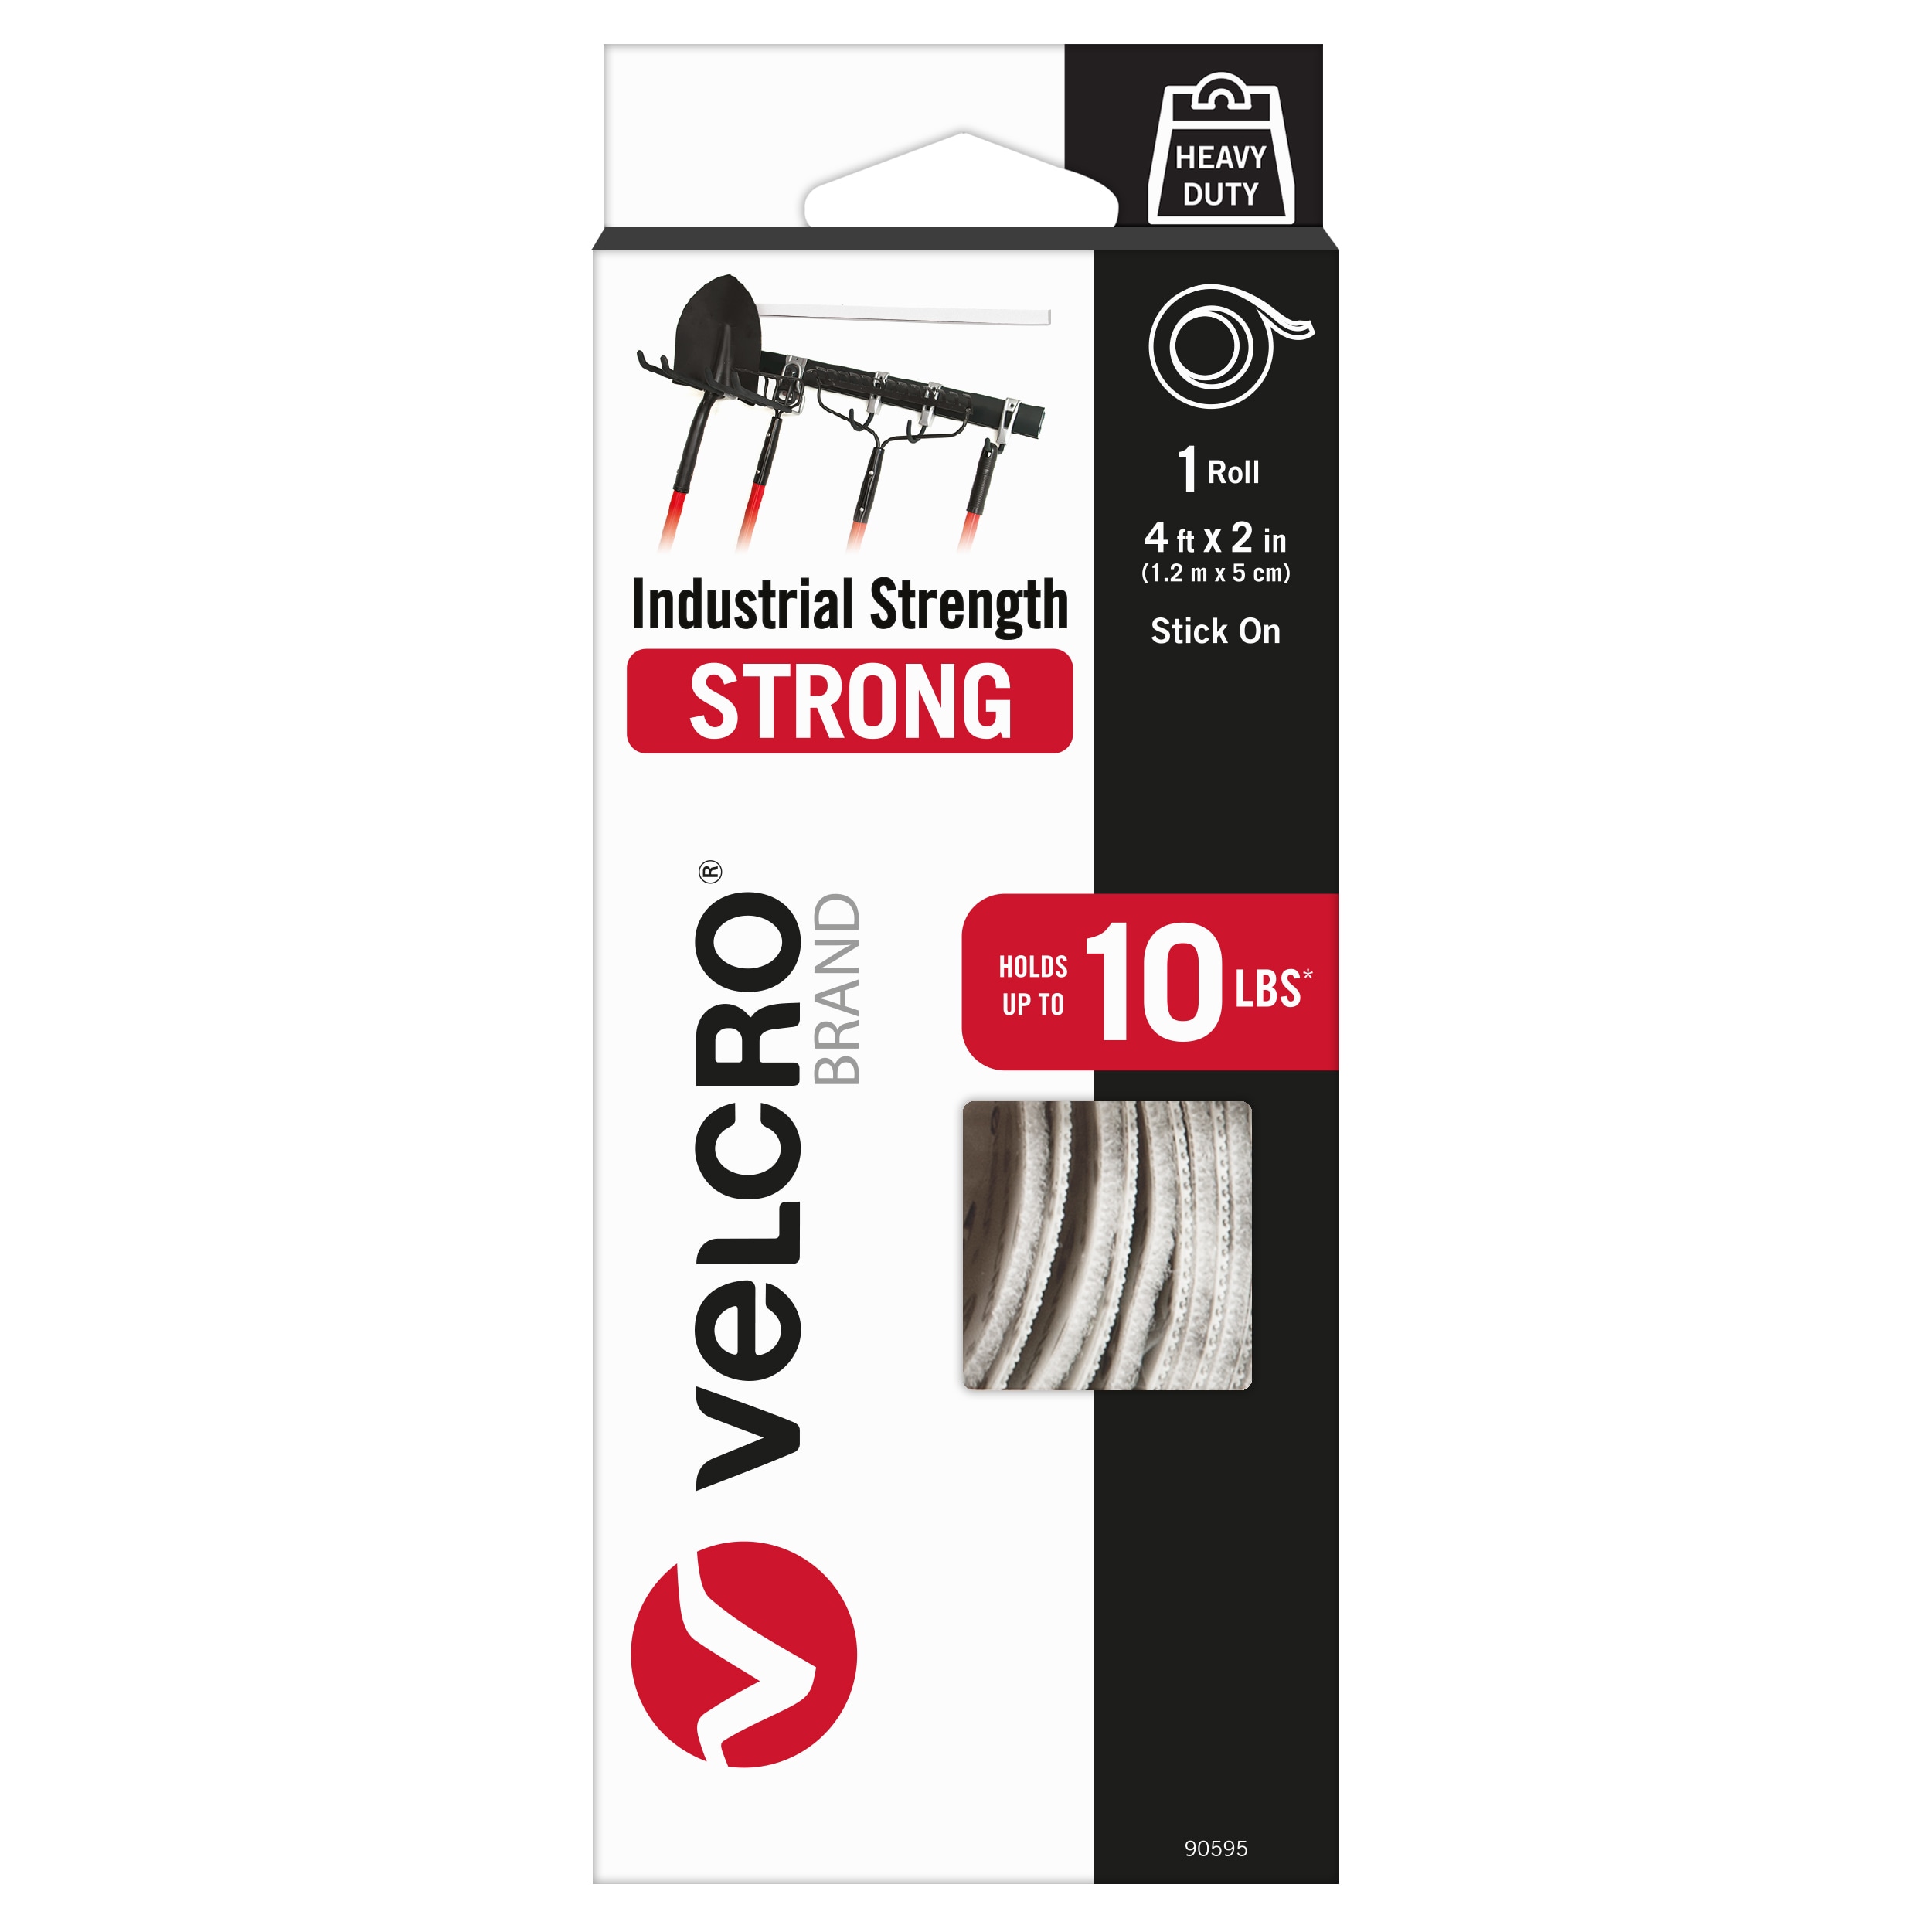 VELCRO® brand Loop Fastener 2 Sew-On White - 5 Yard Roll